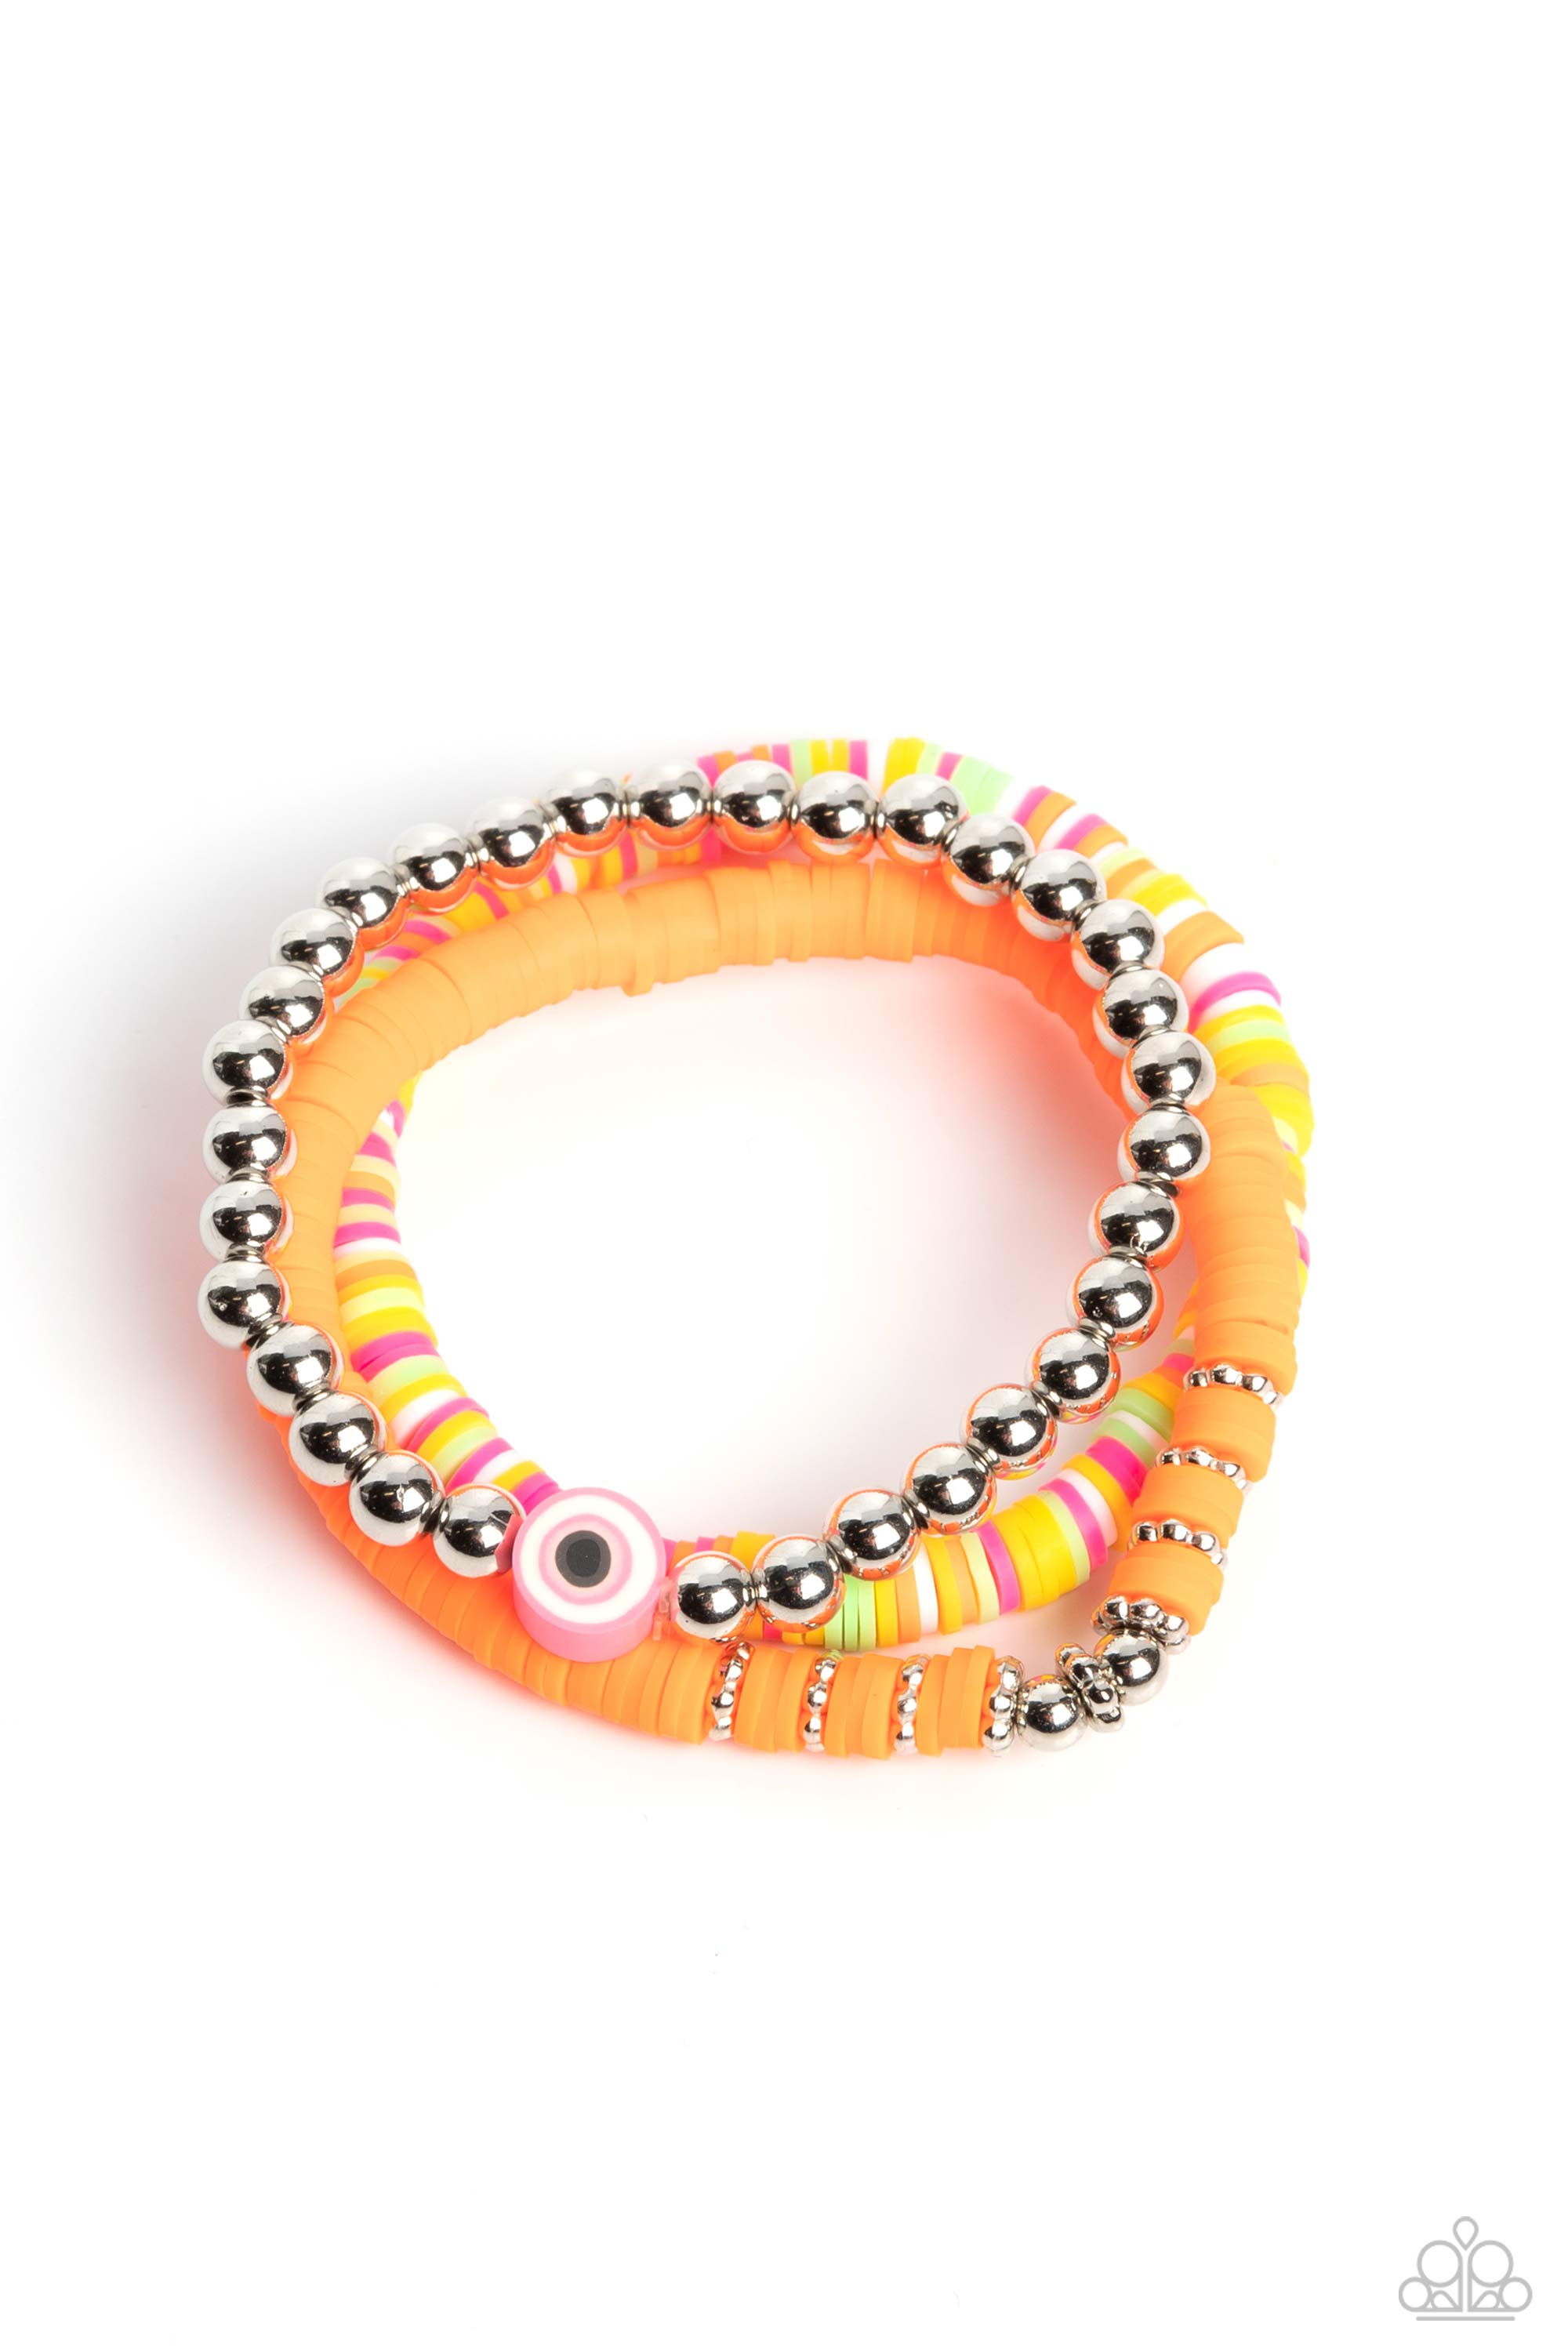 Sam EYE Am Multi Orange Bracelet - Paparazzi Accessories- lightbox - CarasShop.com - $5 Jewelry by Cara Jewels